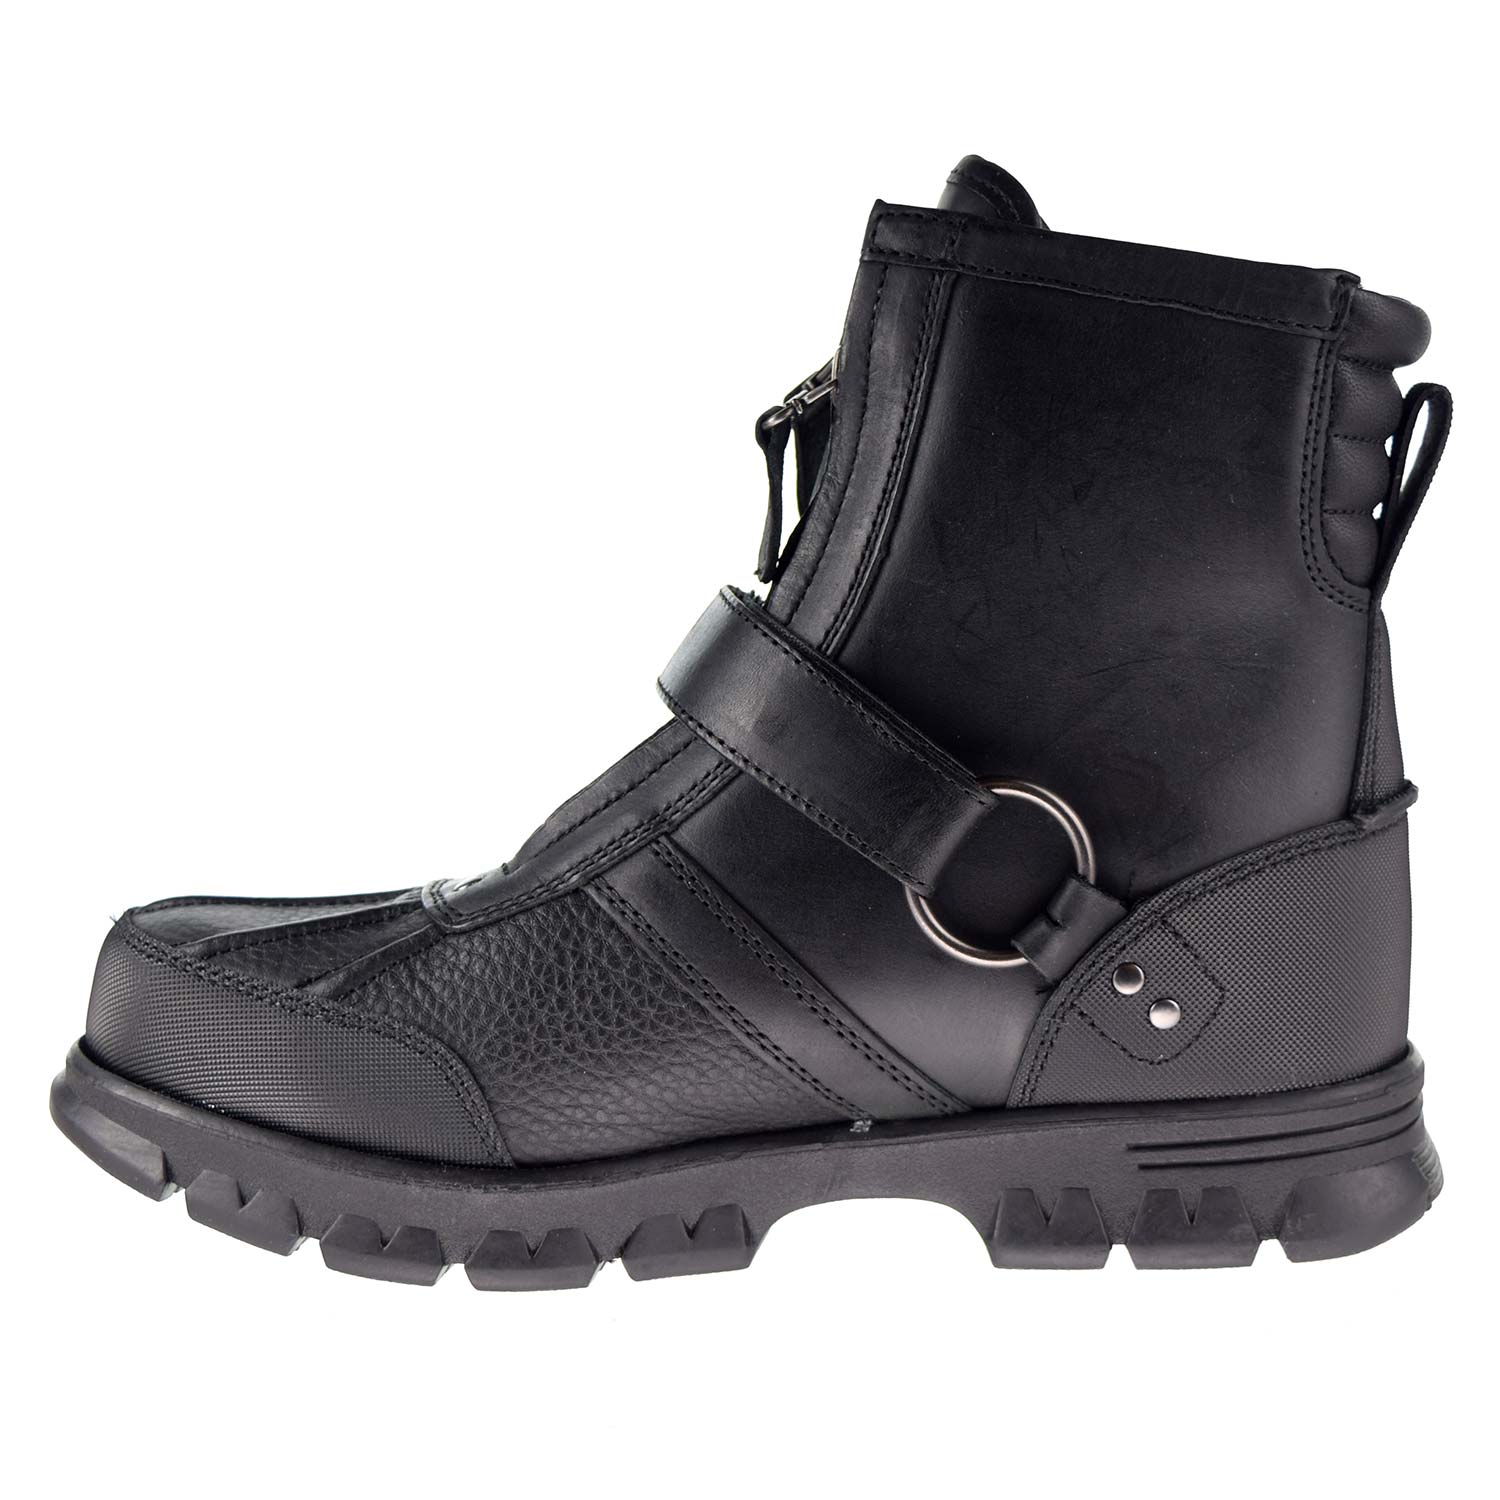 Polo Ralph Lauren Conquest Hi III Men's Boots Black 812741873-001 | eBay